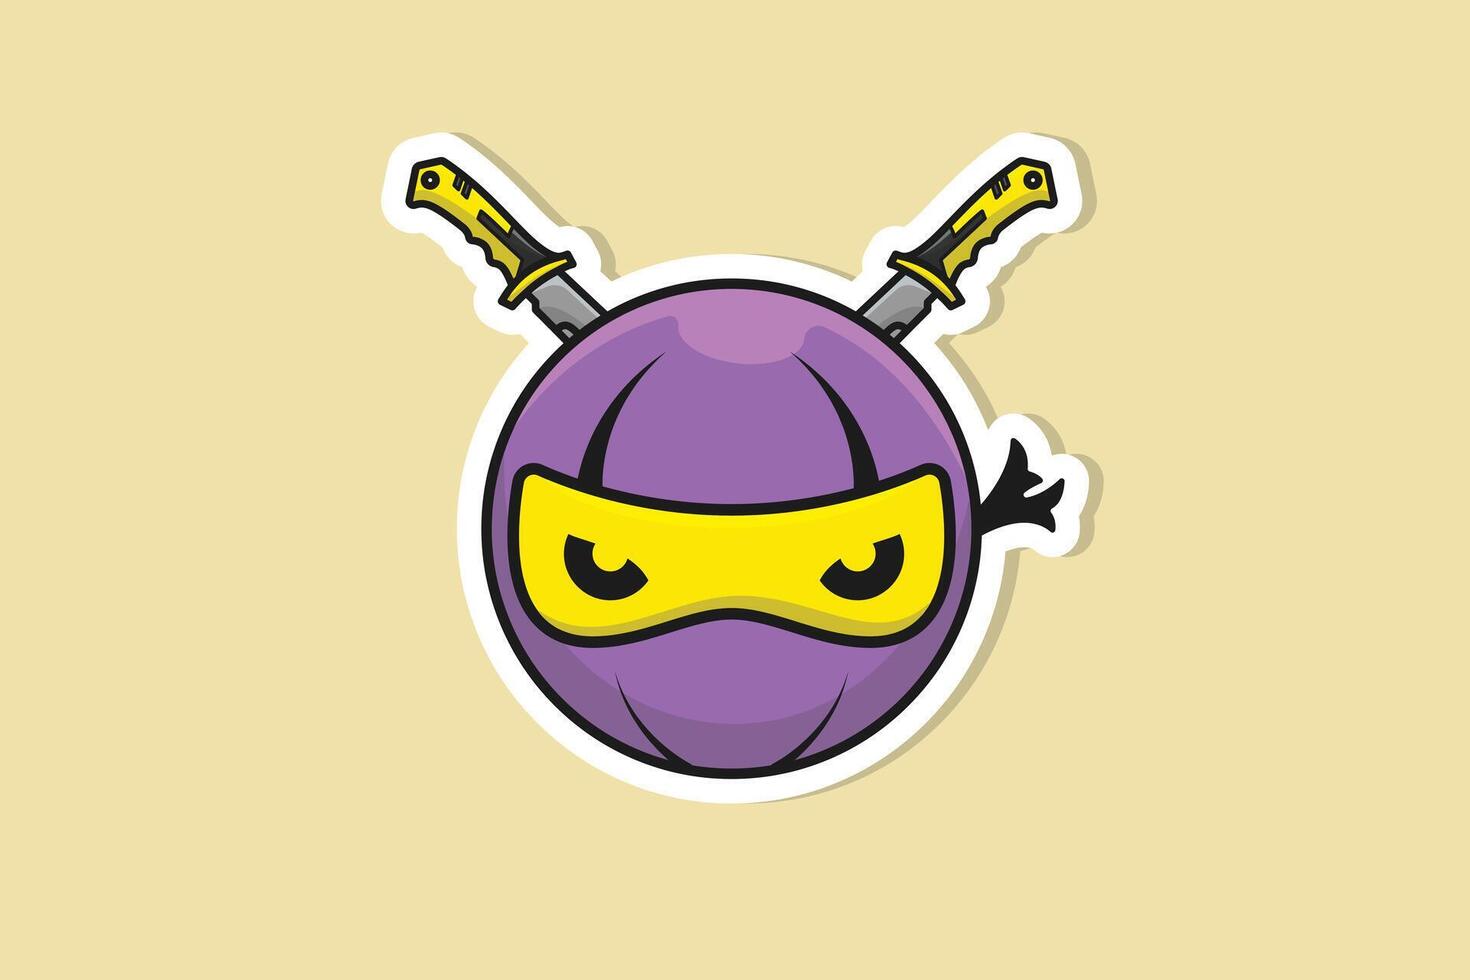 Ninja Ball mit Schwerter Aufkleber Design Vektor Illustration. Ninja Menschen Symbol Konzept. Ninja Ball mit Schwerter im Kreuz Zeichen Aufkleber Design Symbole Logo mit Schatten.